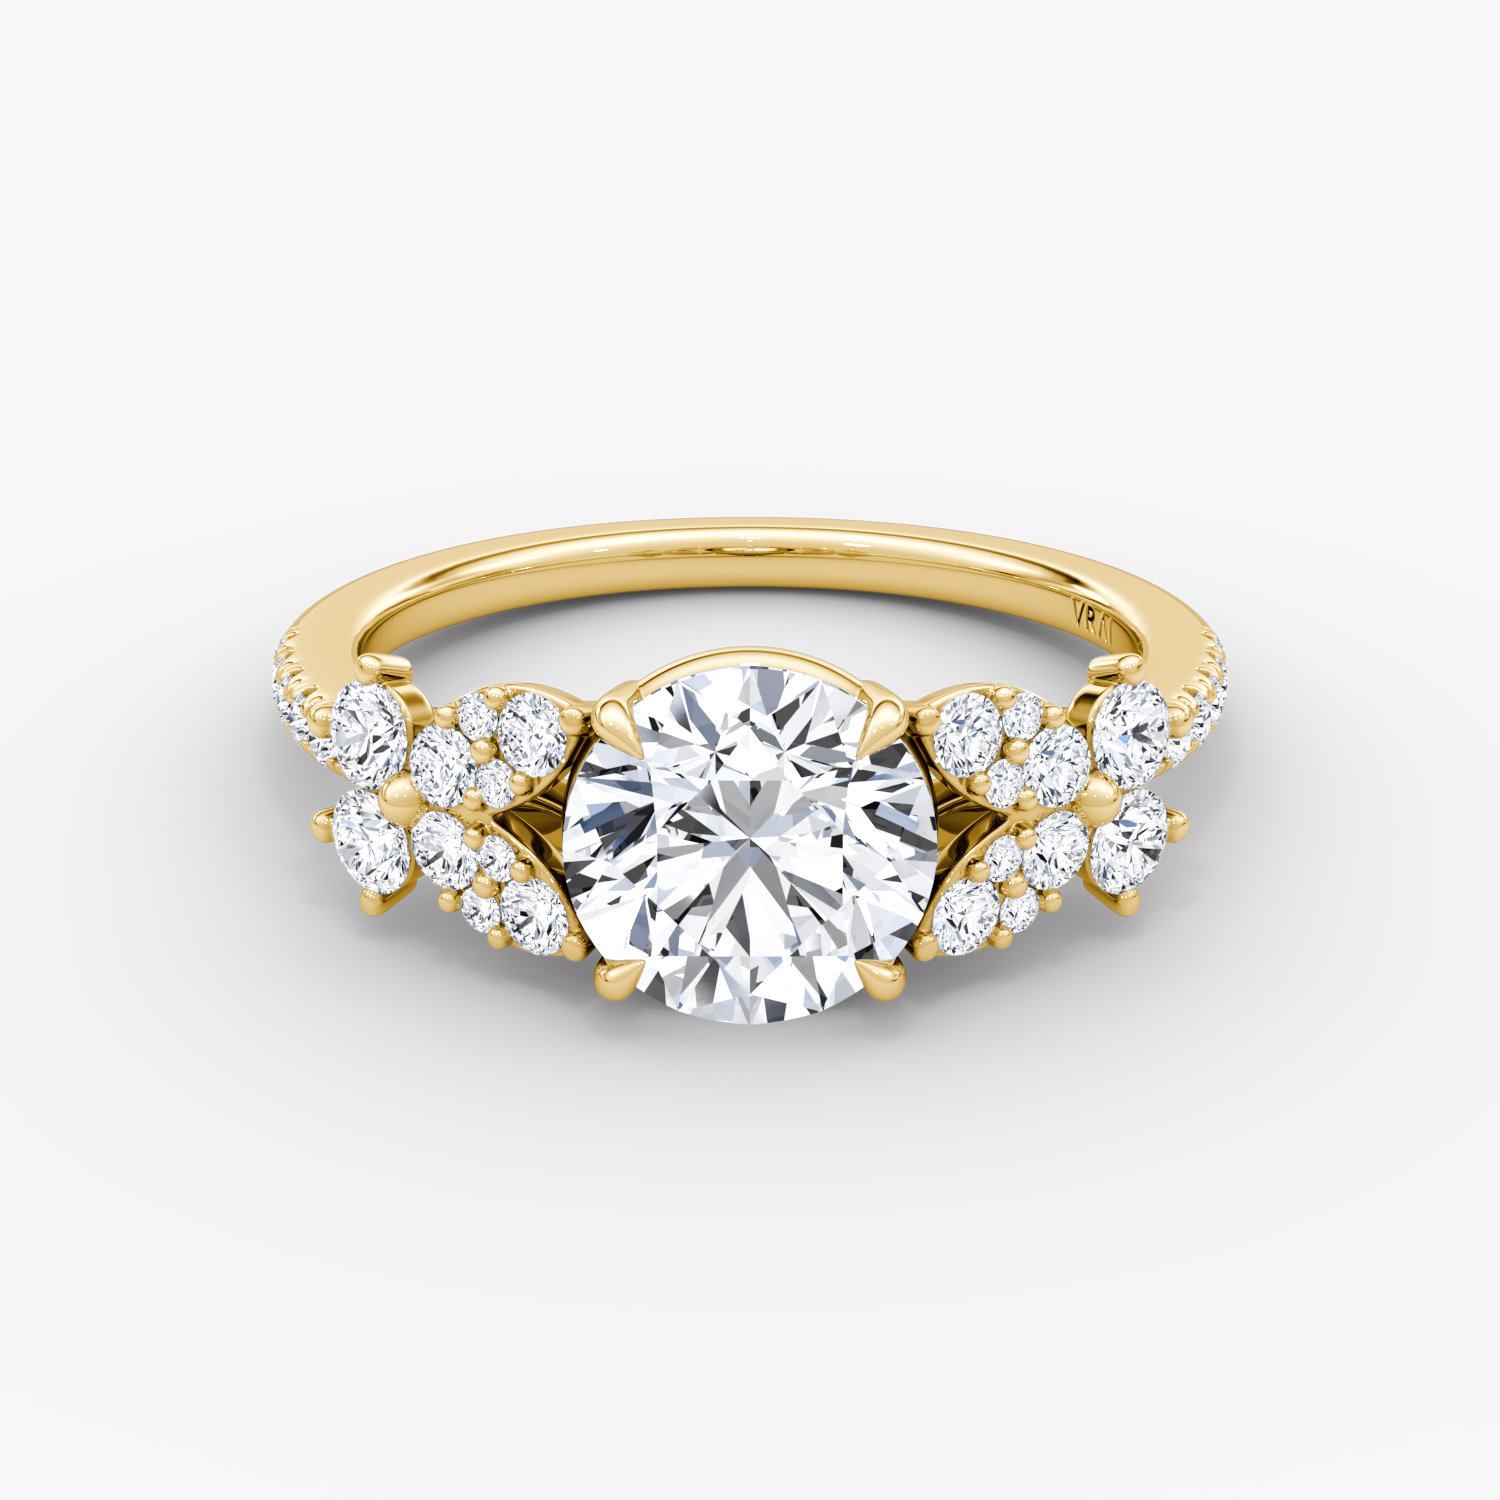 Couple Rings with VRAI Created Diamonds